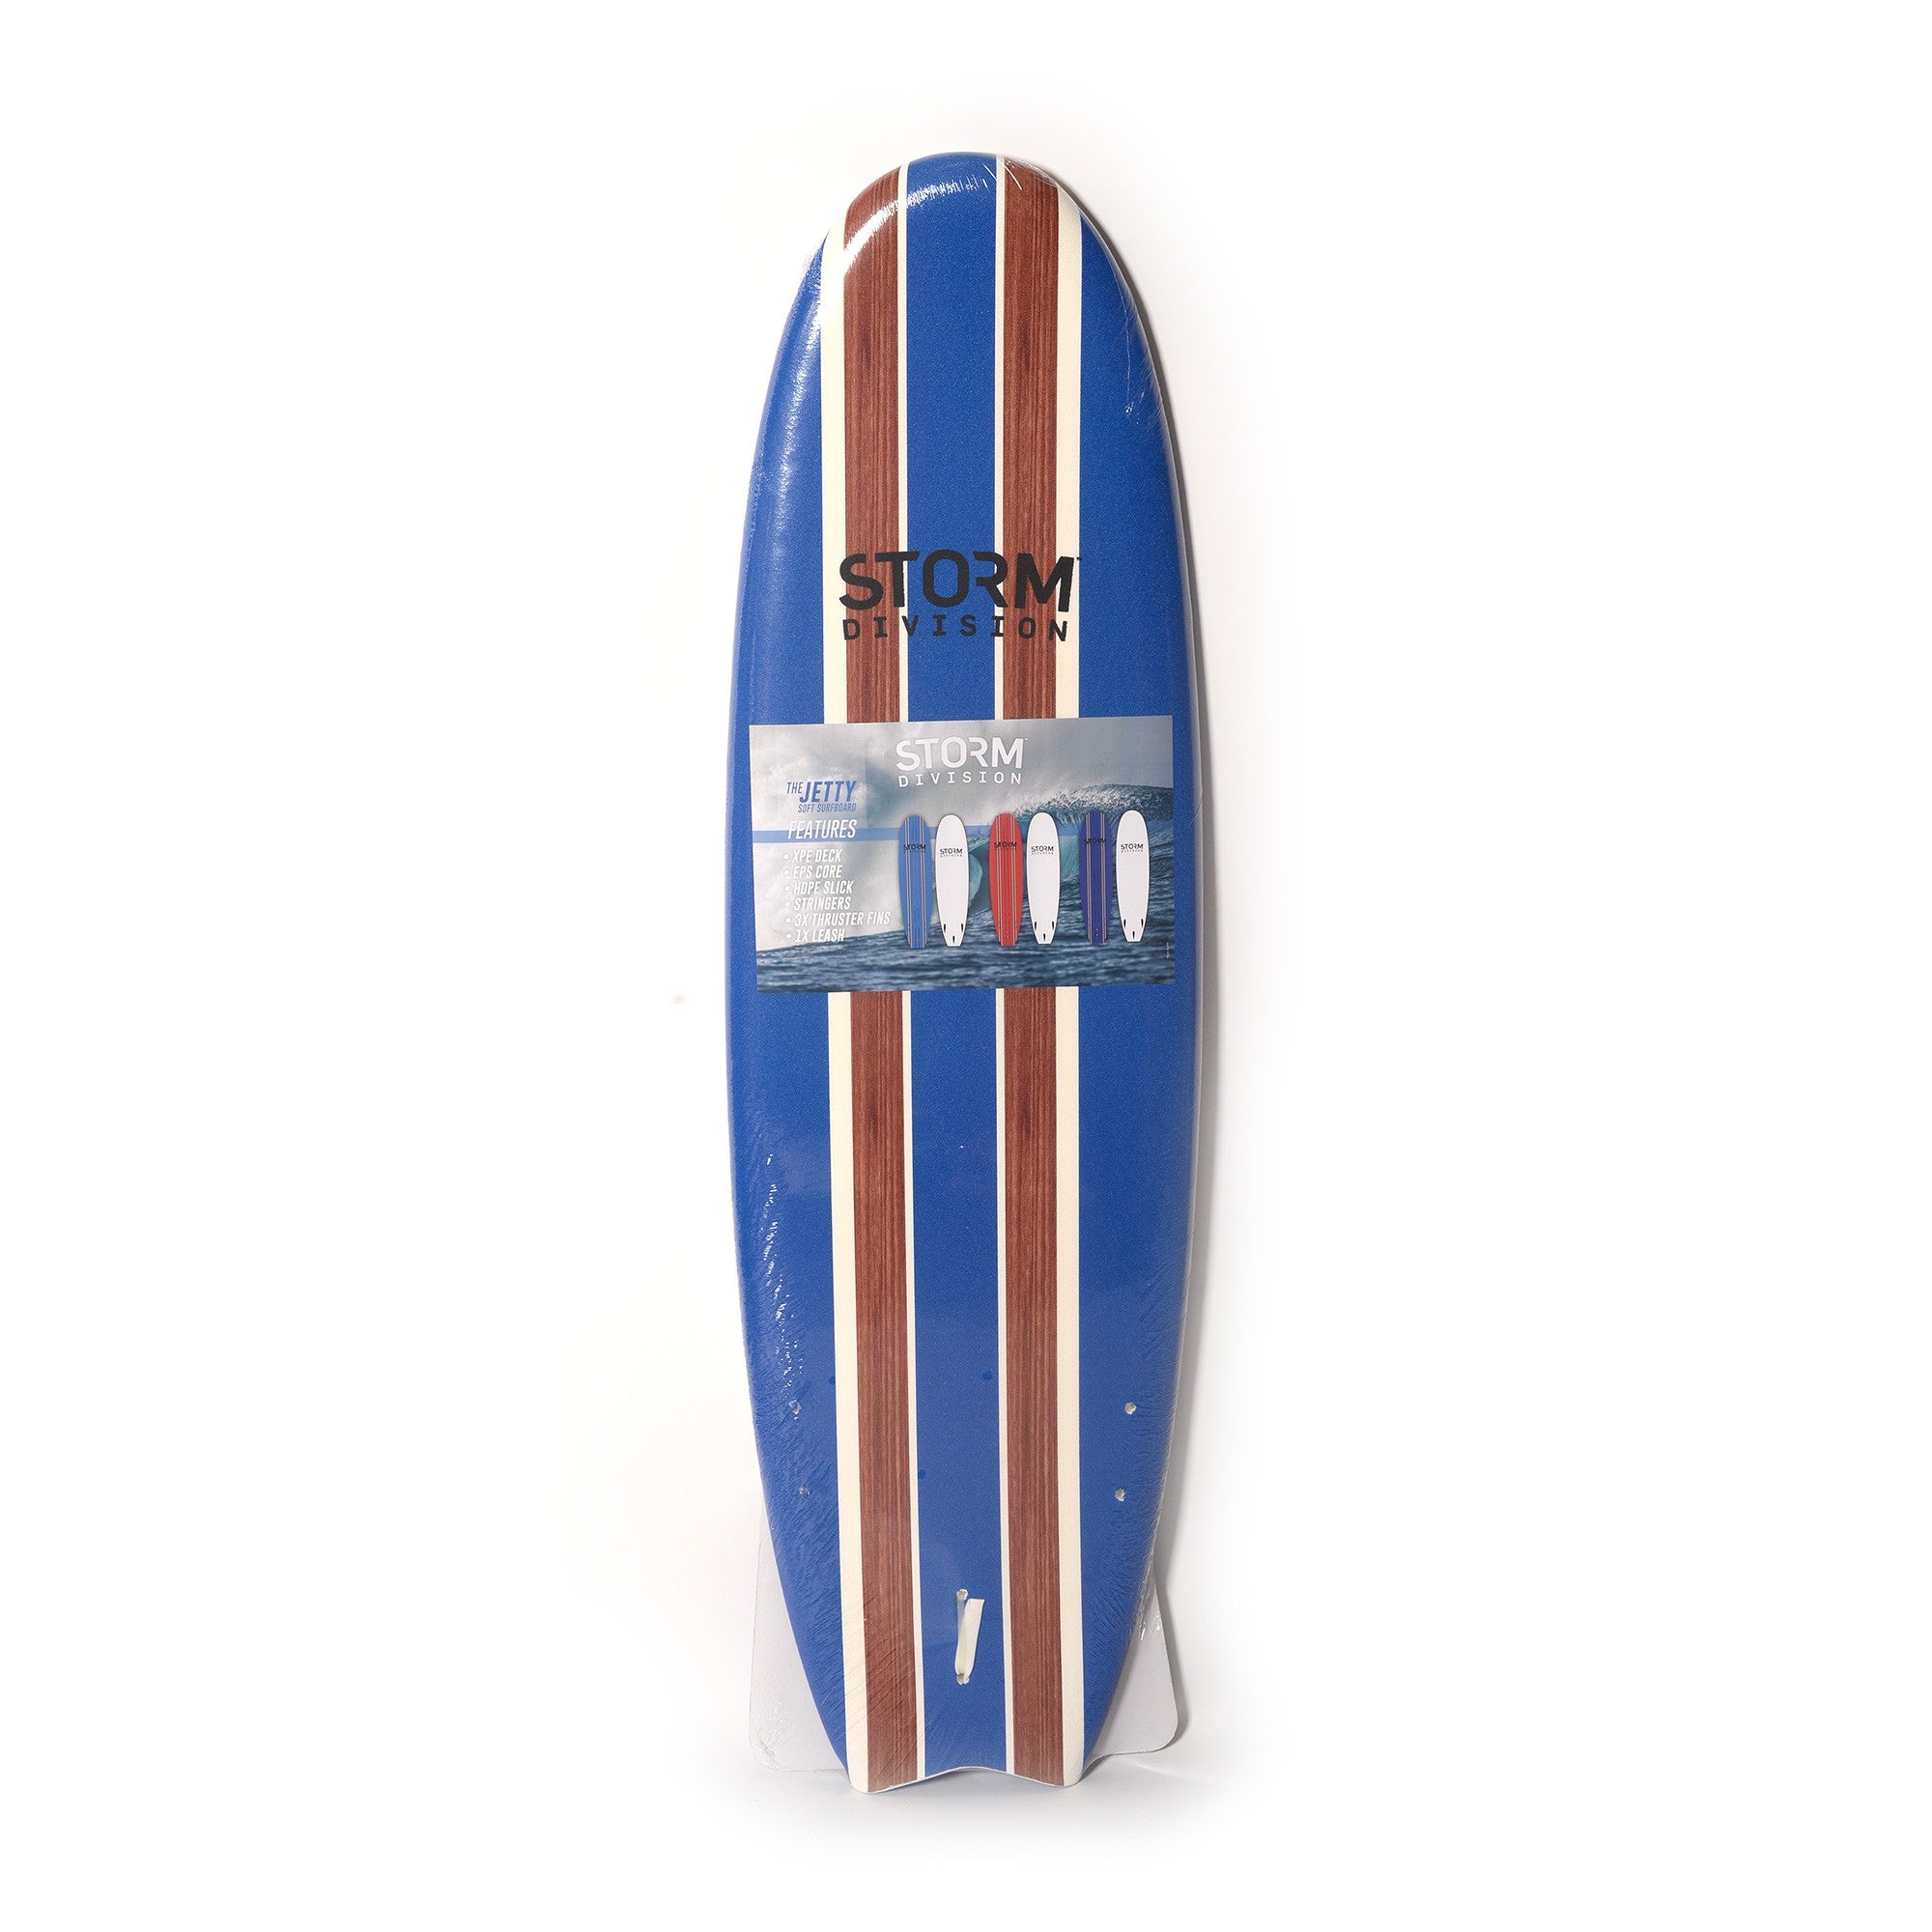 STORM DIVISION - Jetty Softboard - Foam Surfboard - 5'8 - Dark blue